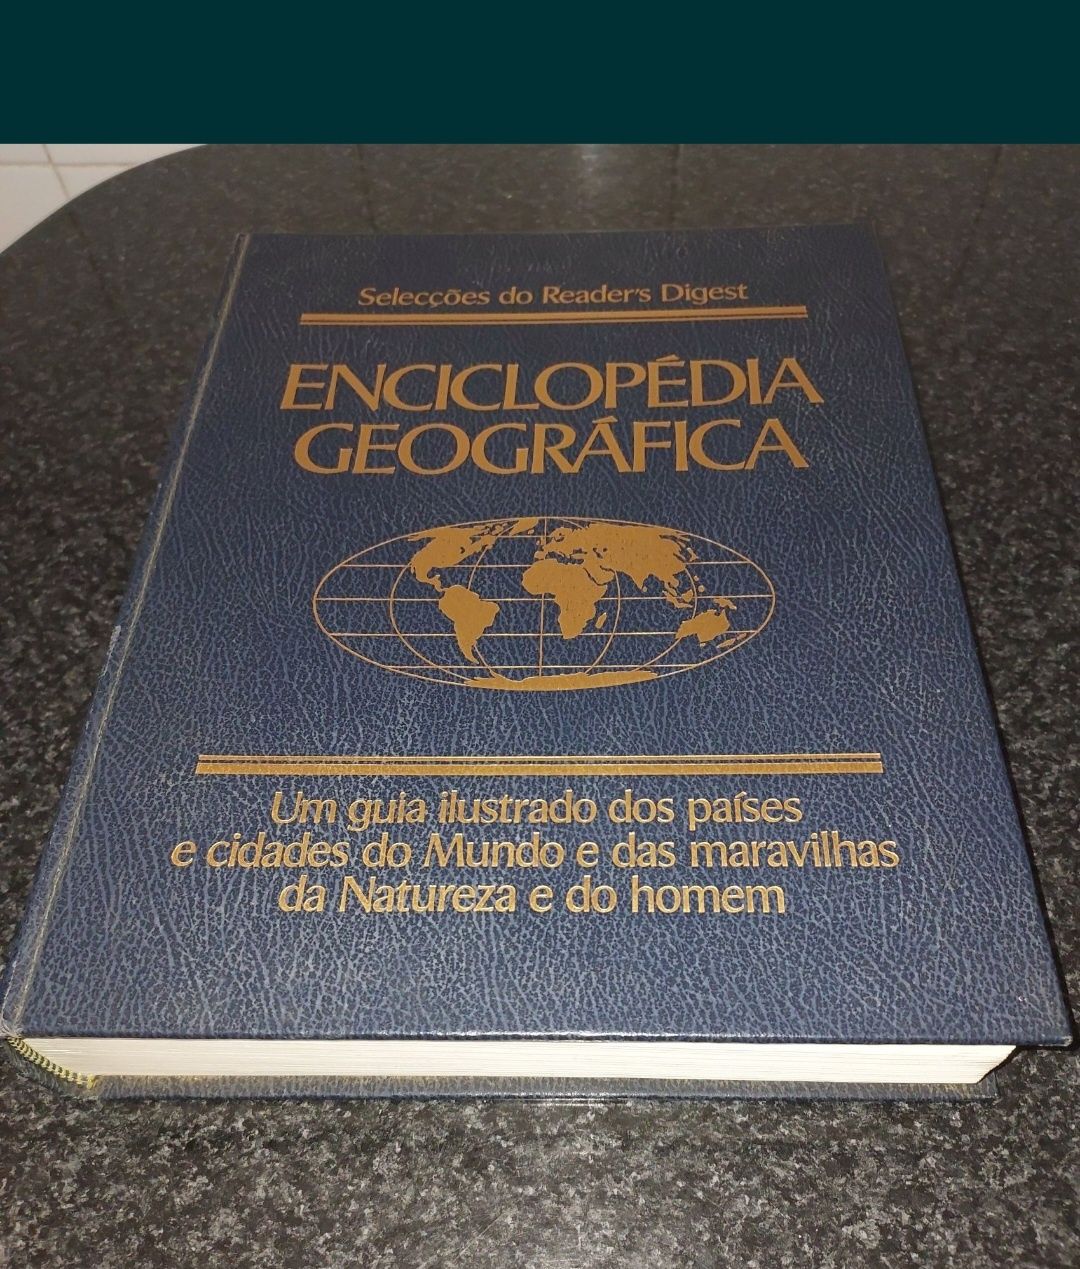 Enciclopédia Geográfica estado impecavél